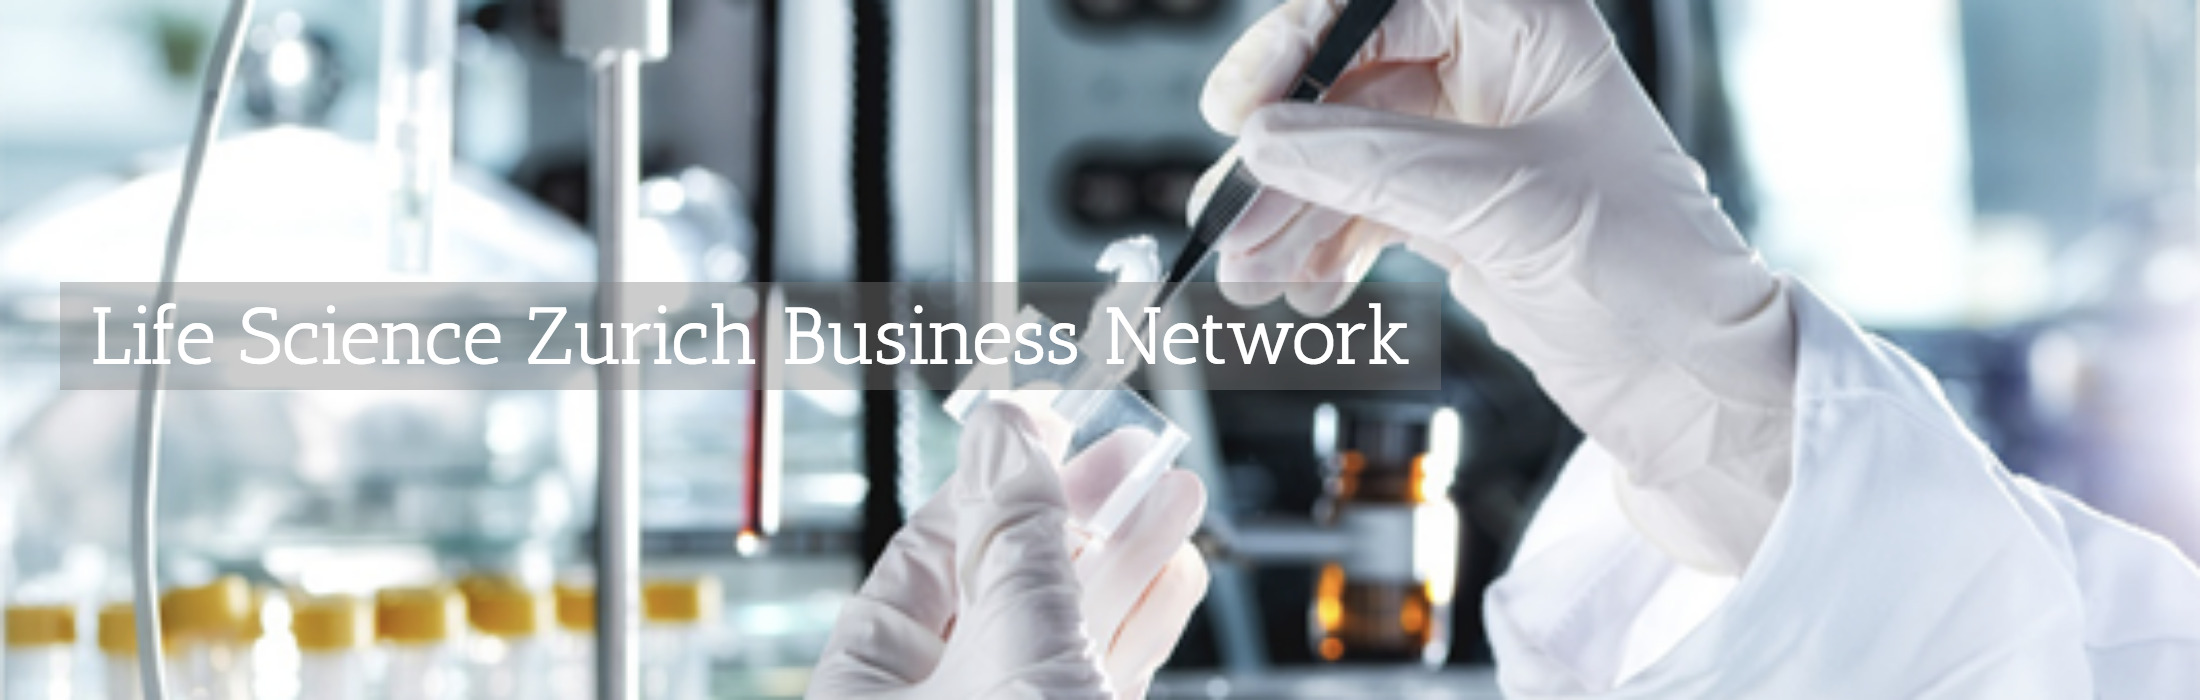 Life Science Zurich Business Network